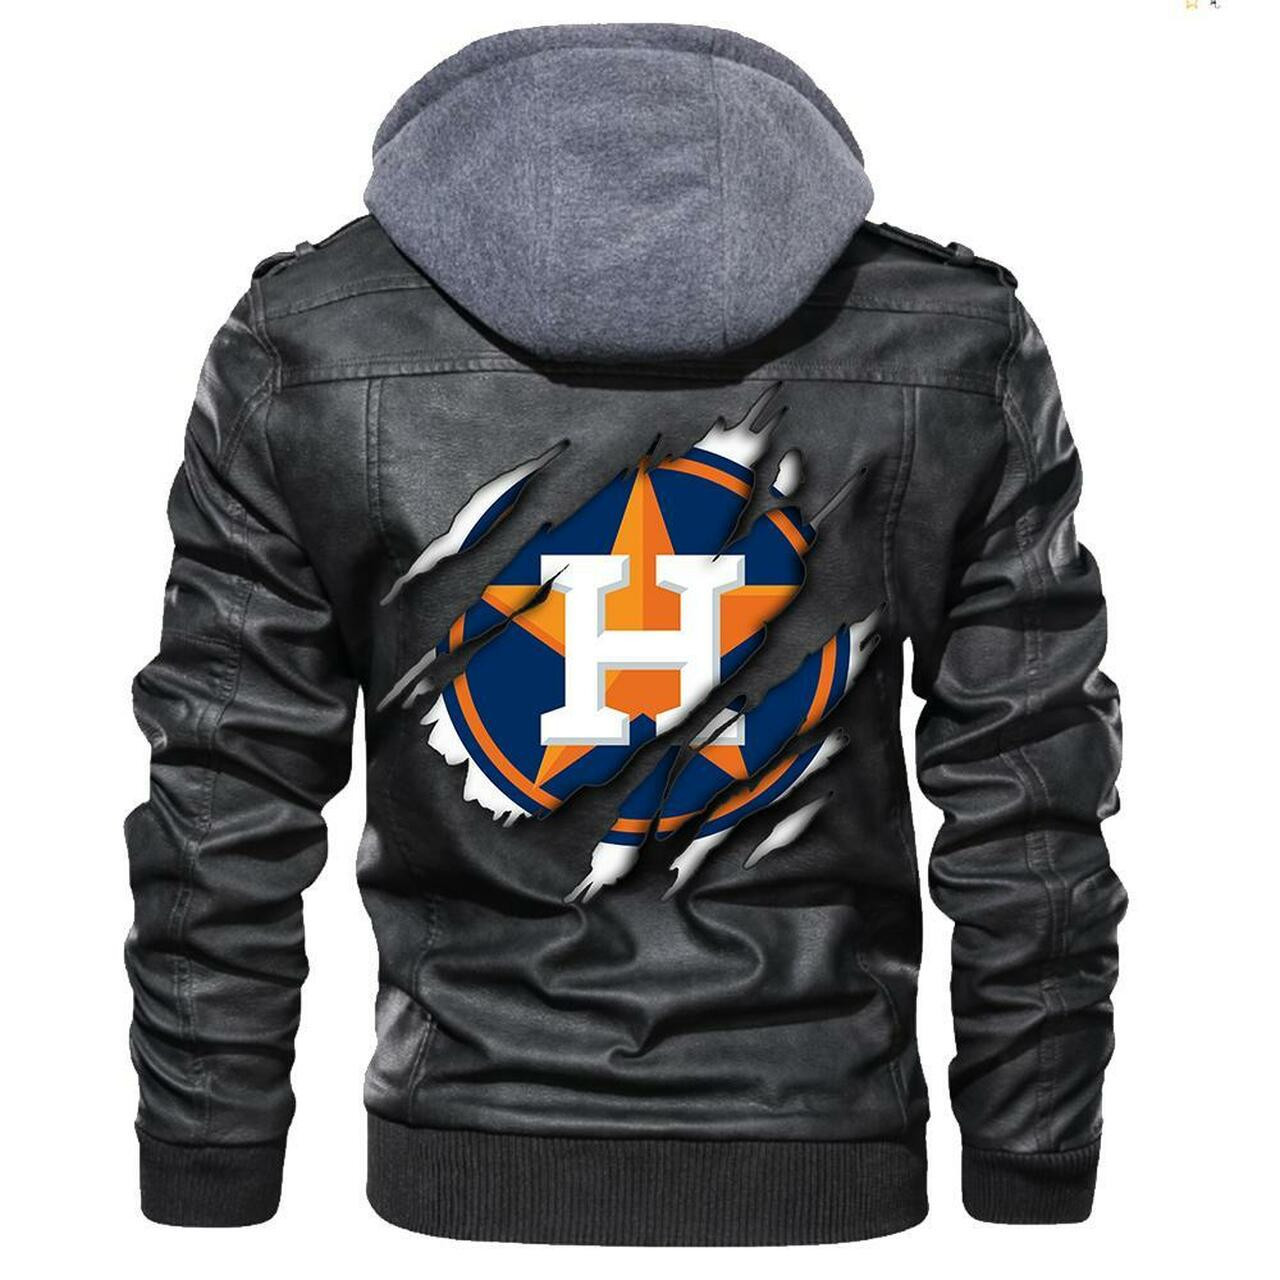 Top leather jacket Sells Best on Techcomshop 162